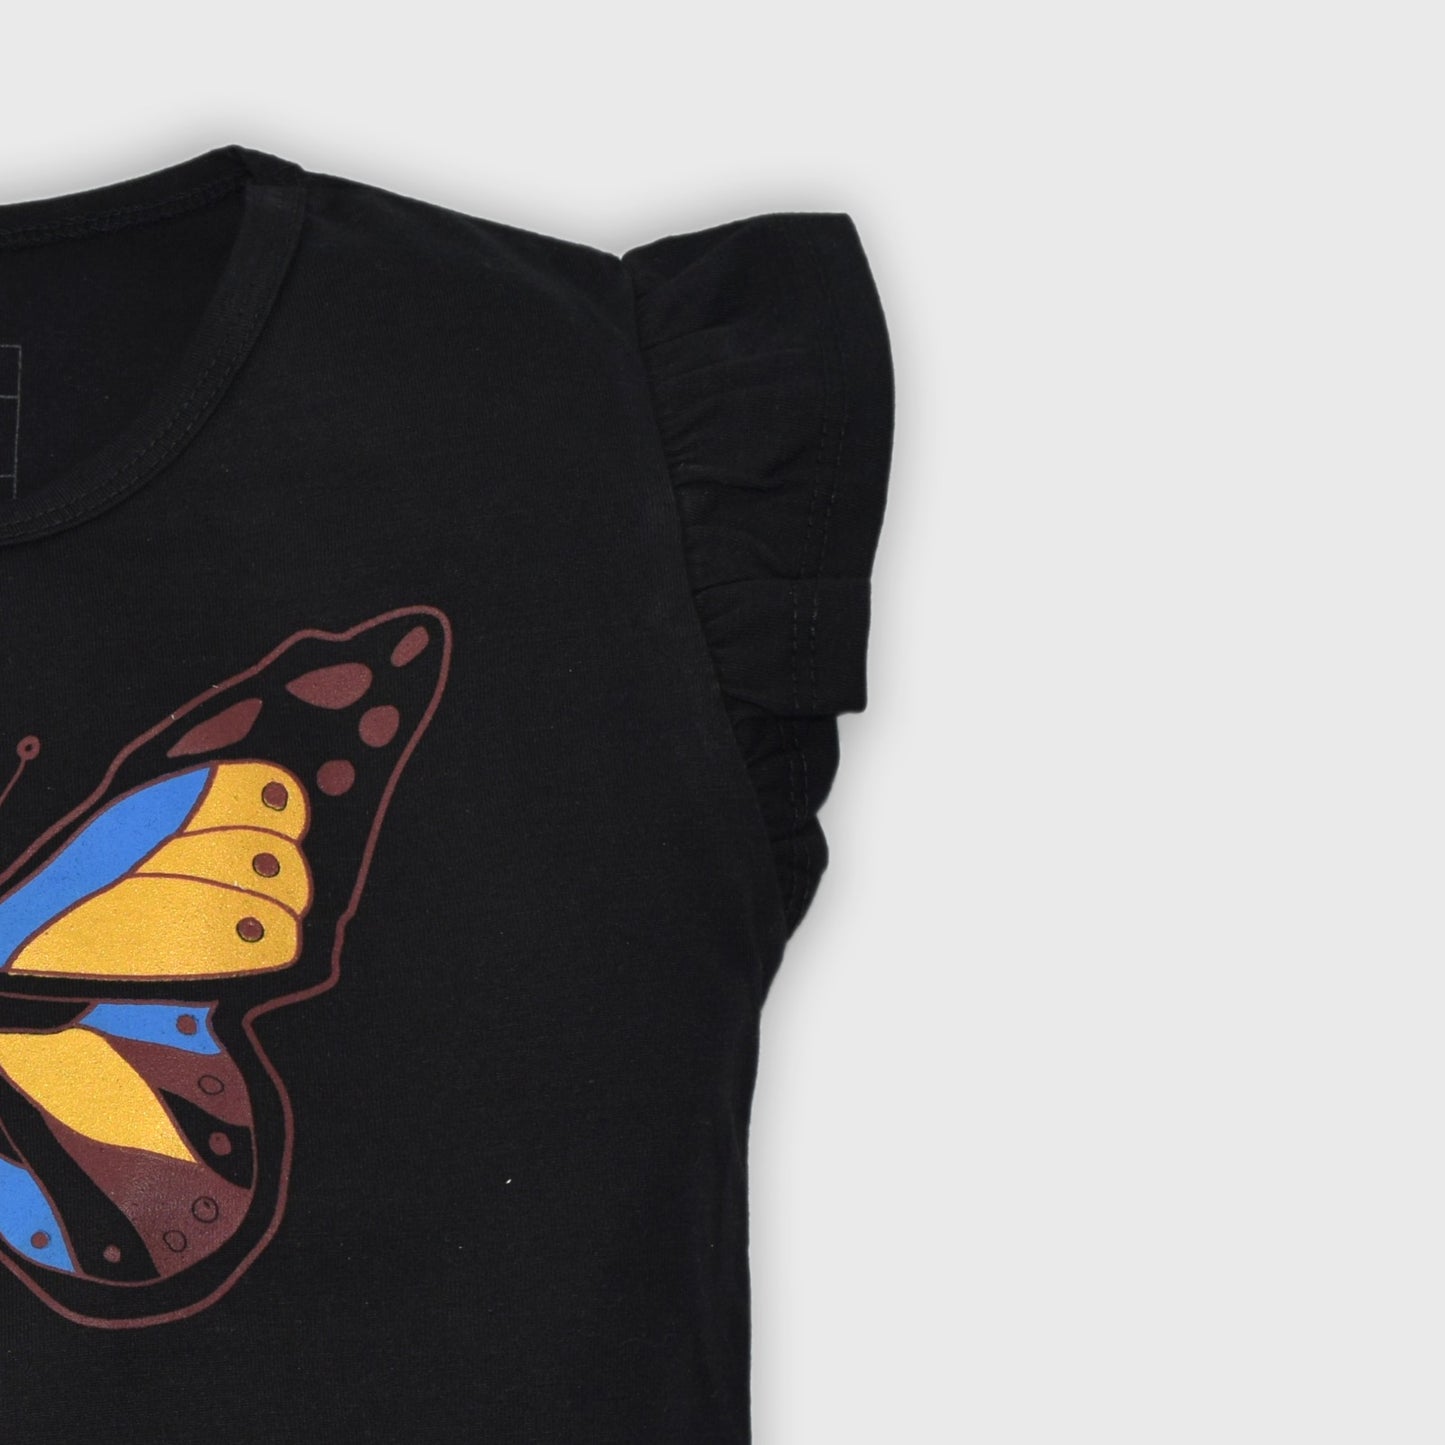 Butterfly Top (Black)